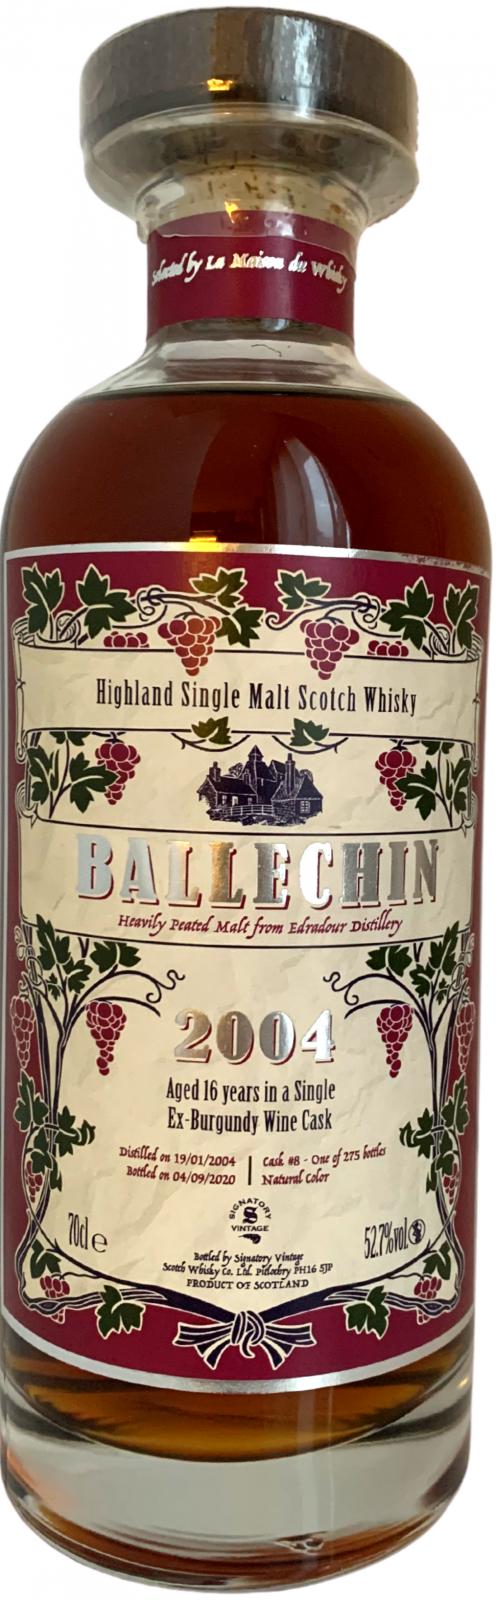 Ballechin 2004 SV